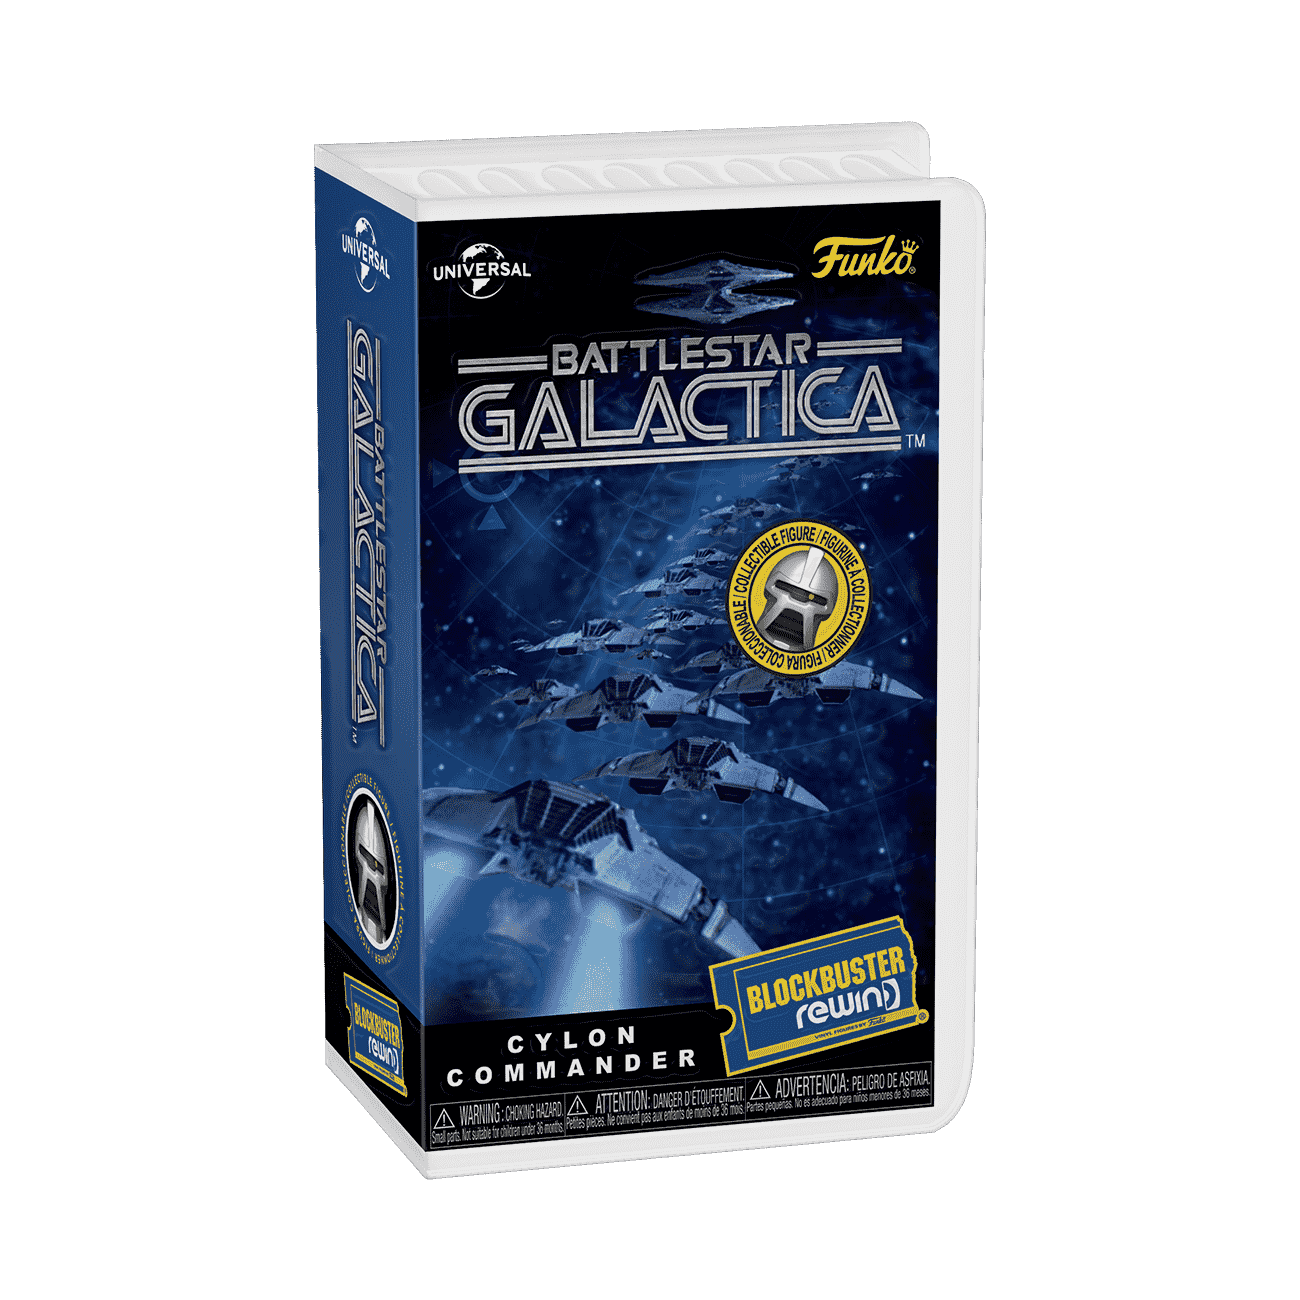 Buy REWIND Cylon Commander (Battlestar Galactica) at Funko.